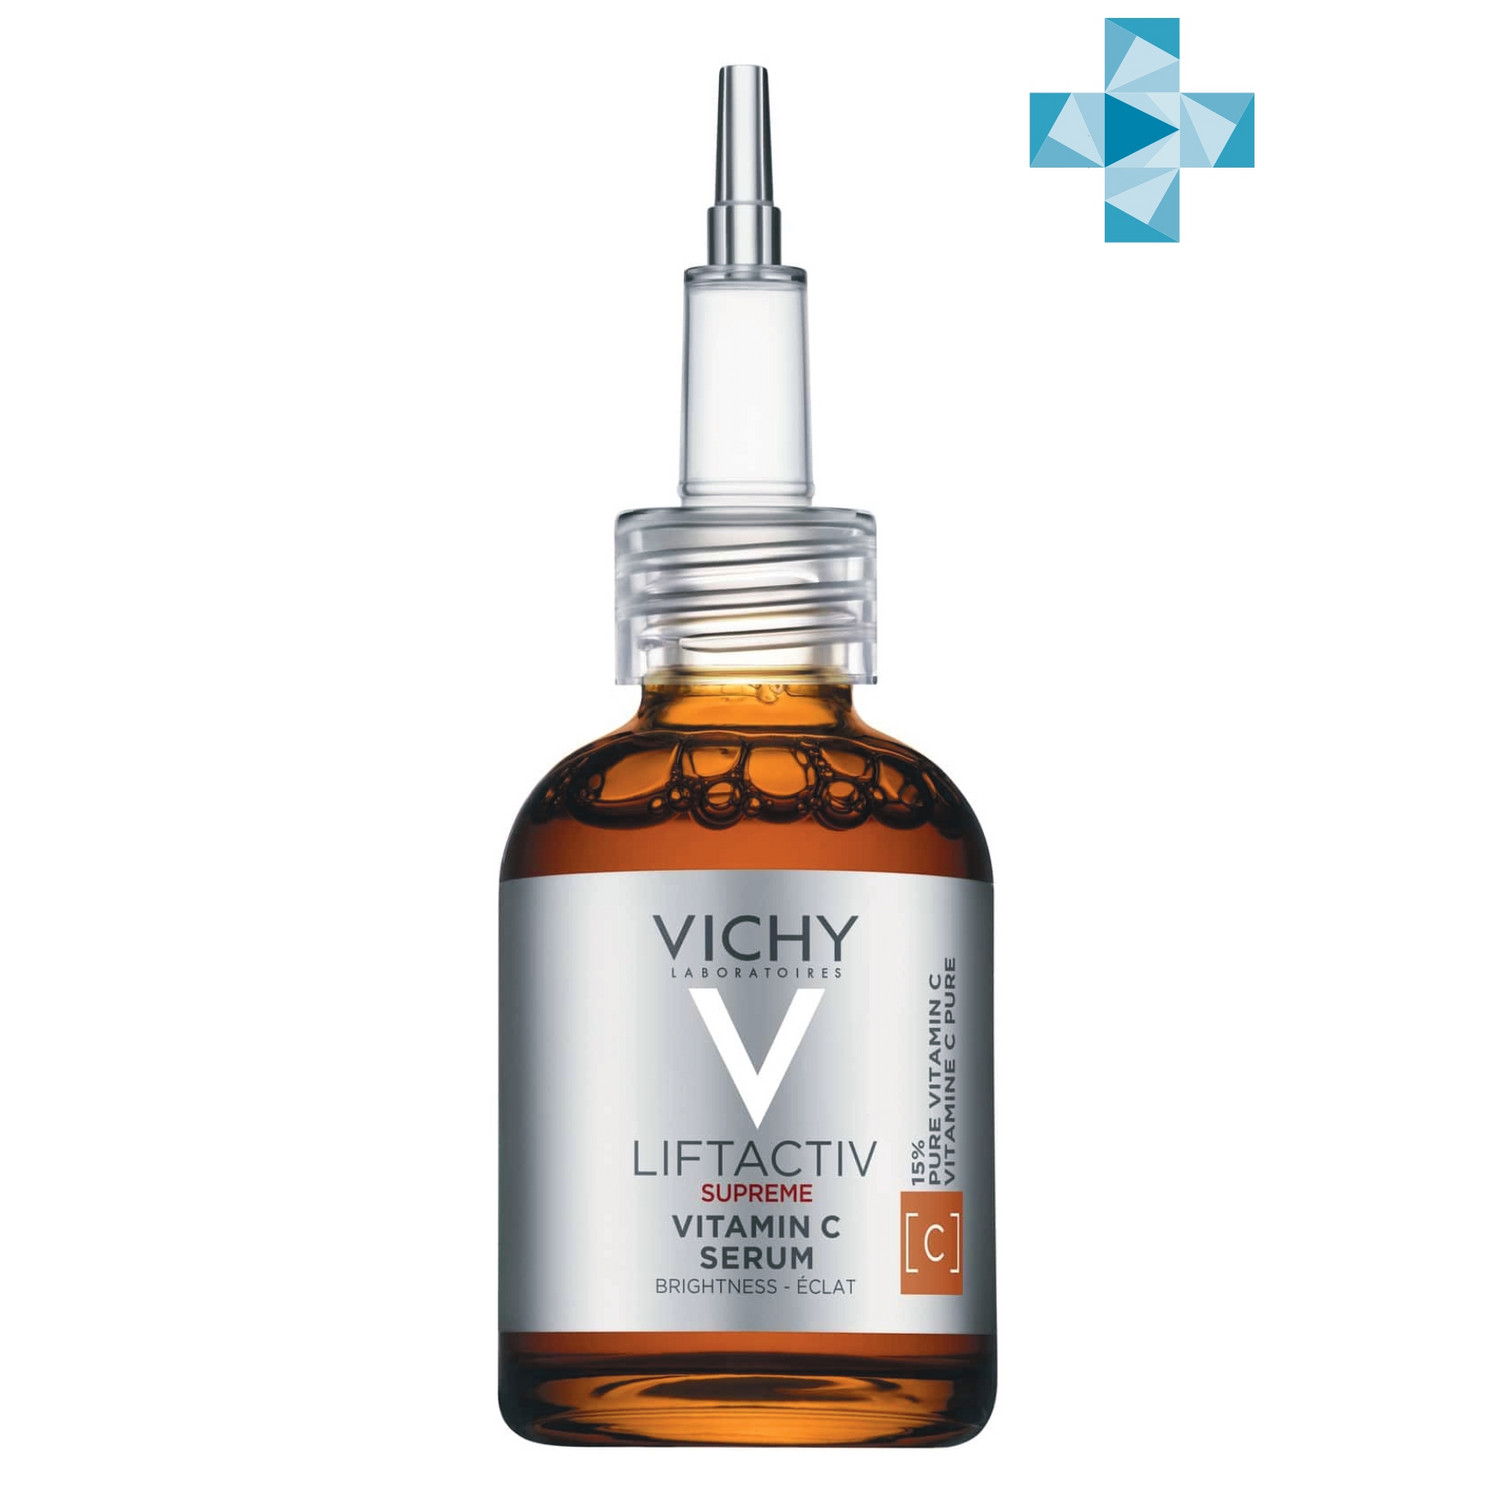 Vichy Концентрированная сыворотка Supreme с витамином С для сияния кожи, 20 мл (Vichy, Liftactiv) сыворотка для сияния кожи концентрированная с витамином с liftactiv supreme vichy виши 20мл